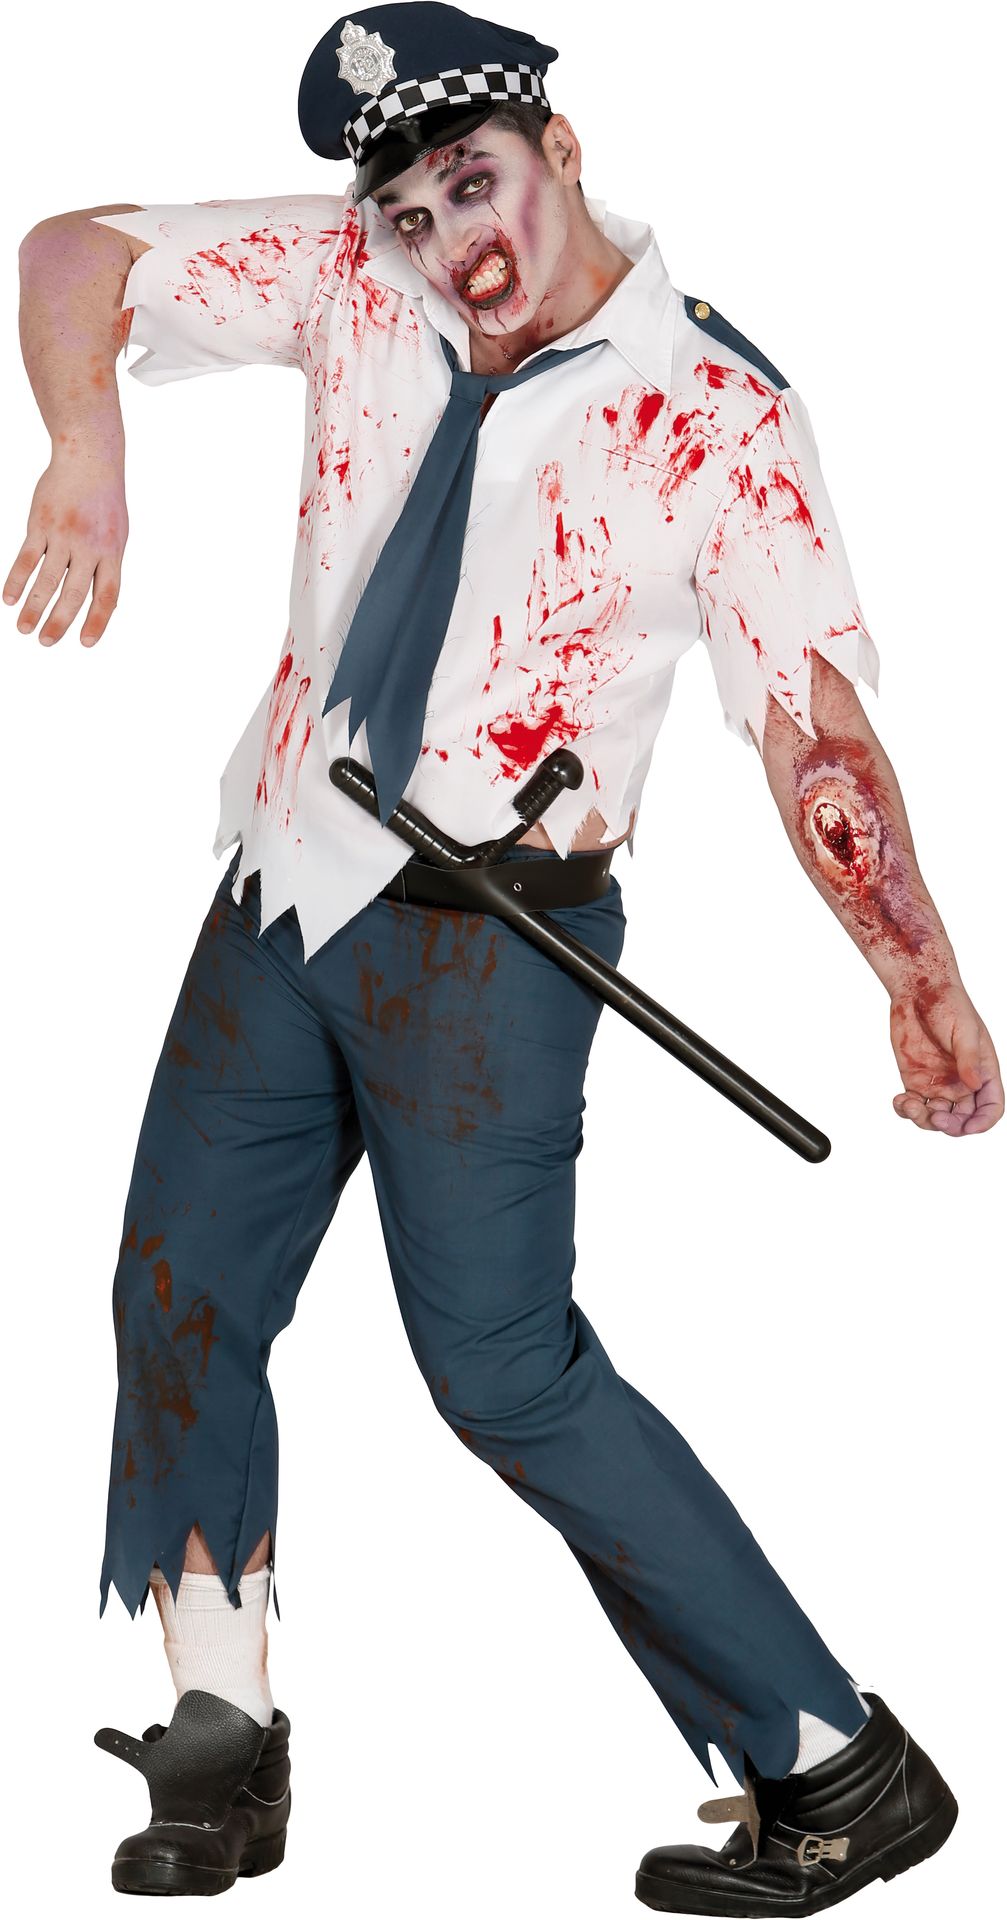 Zombie agent kostuum